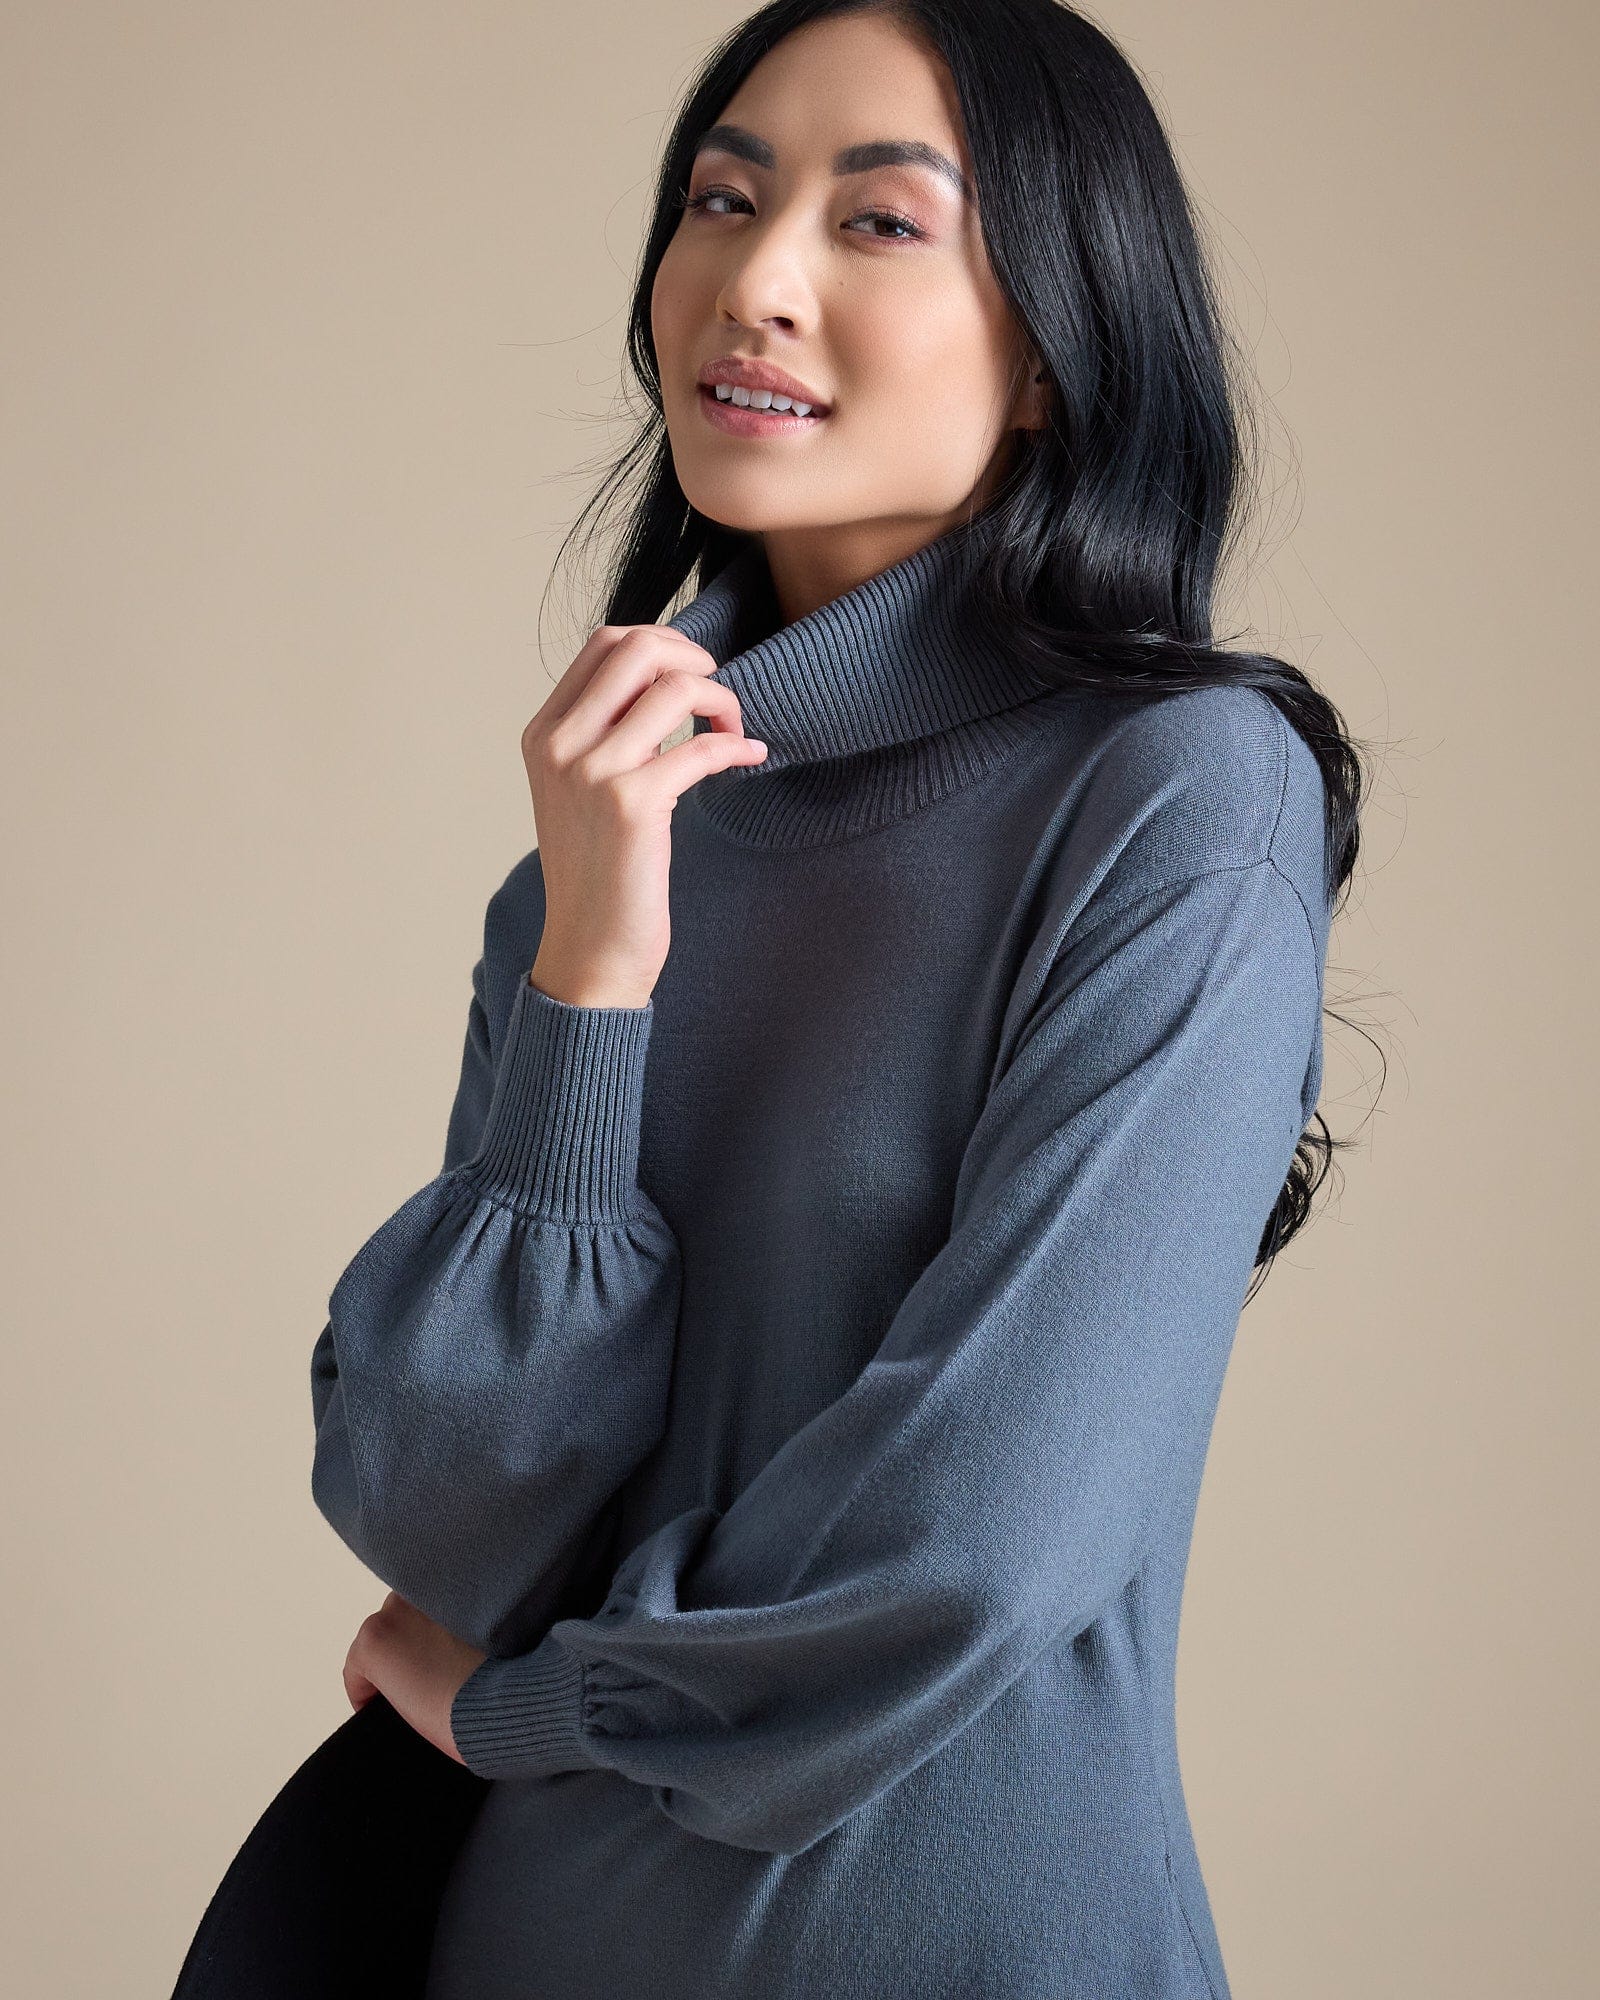 Woman in a long sleeve, midi-length, turtleneck, blue sweater dress